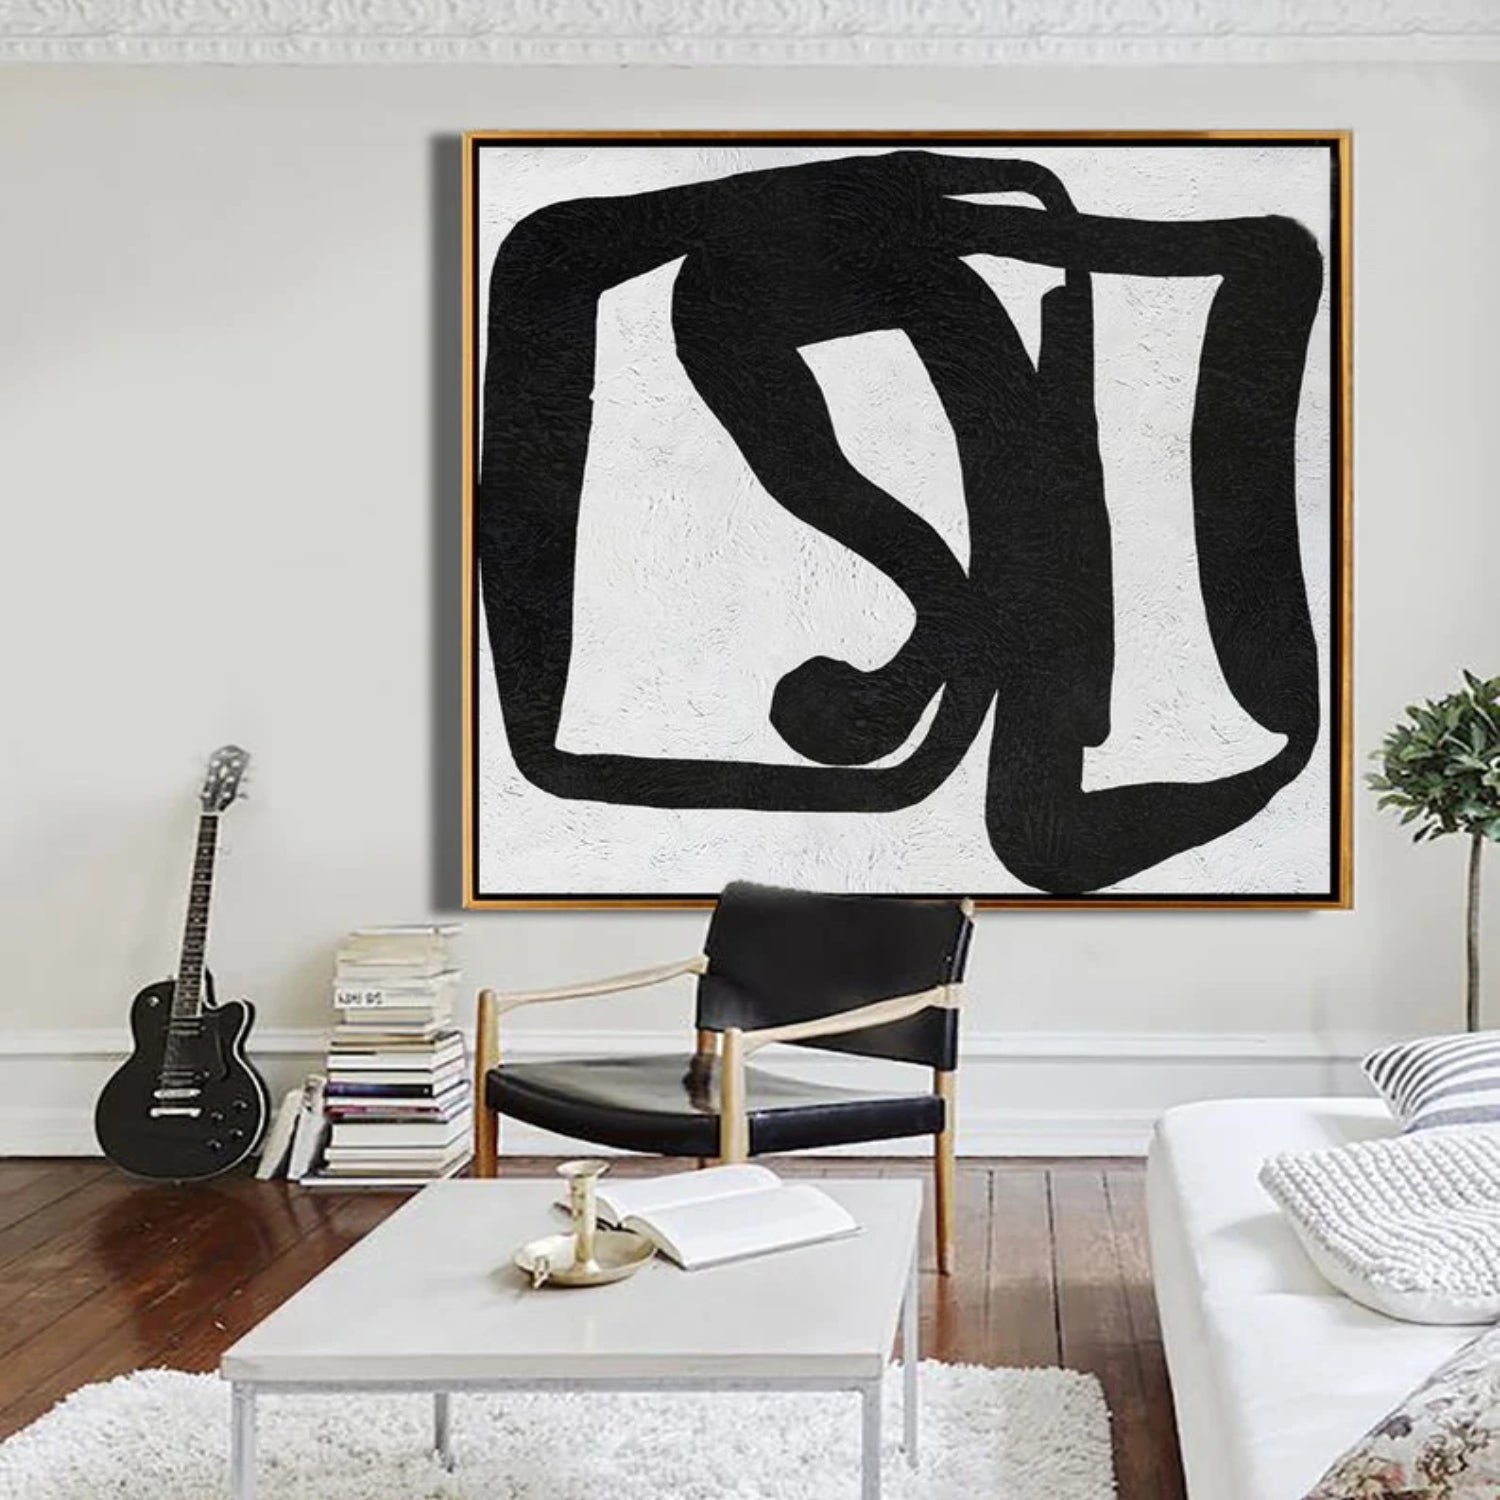 White and Black Minimalist Living Room Wall Art